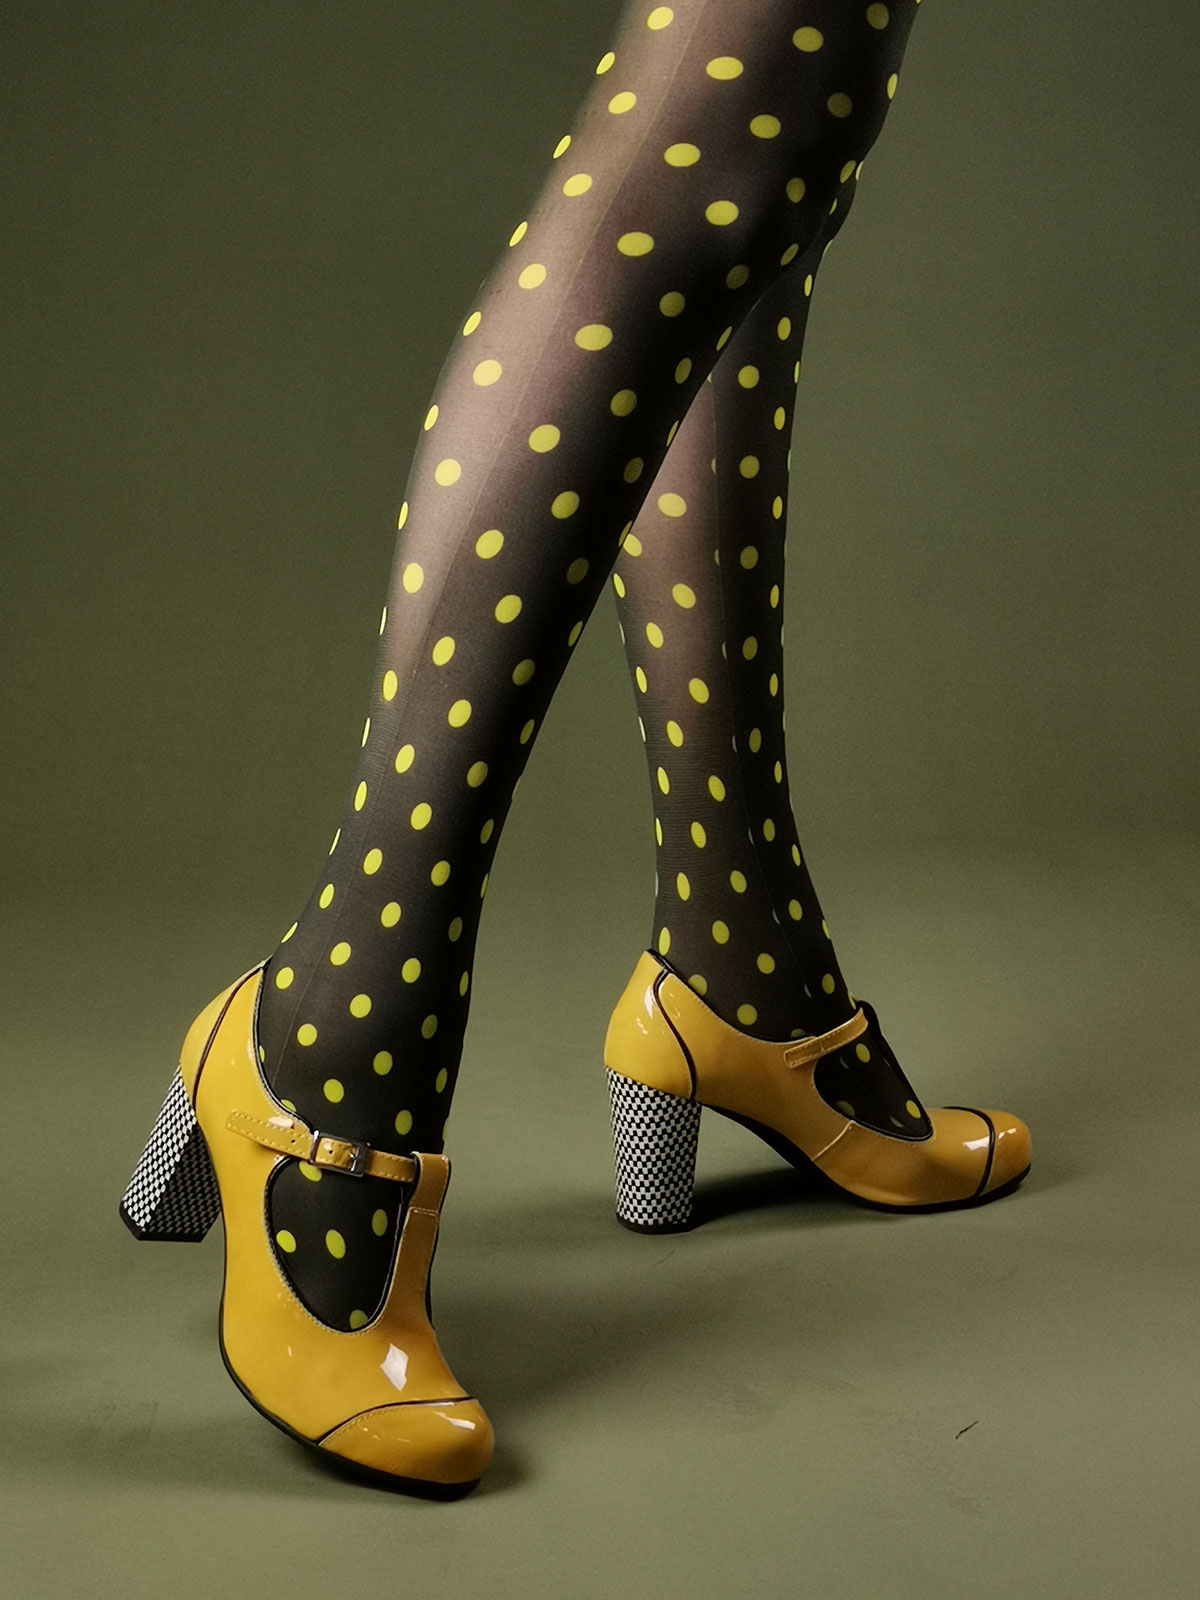 https://www.modshoes.co.uk/wp-content/uploads/2022/02/modshoes-polka-dot-yellow-and-black-vintage-retro-tights-01.jpg